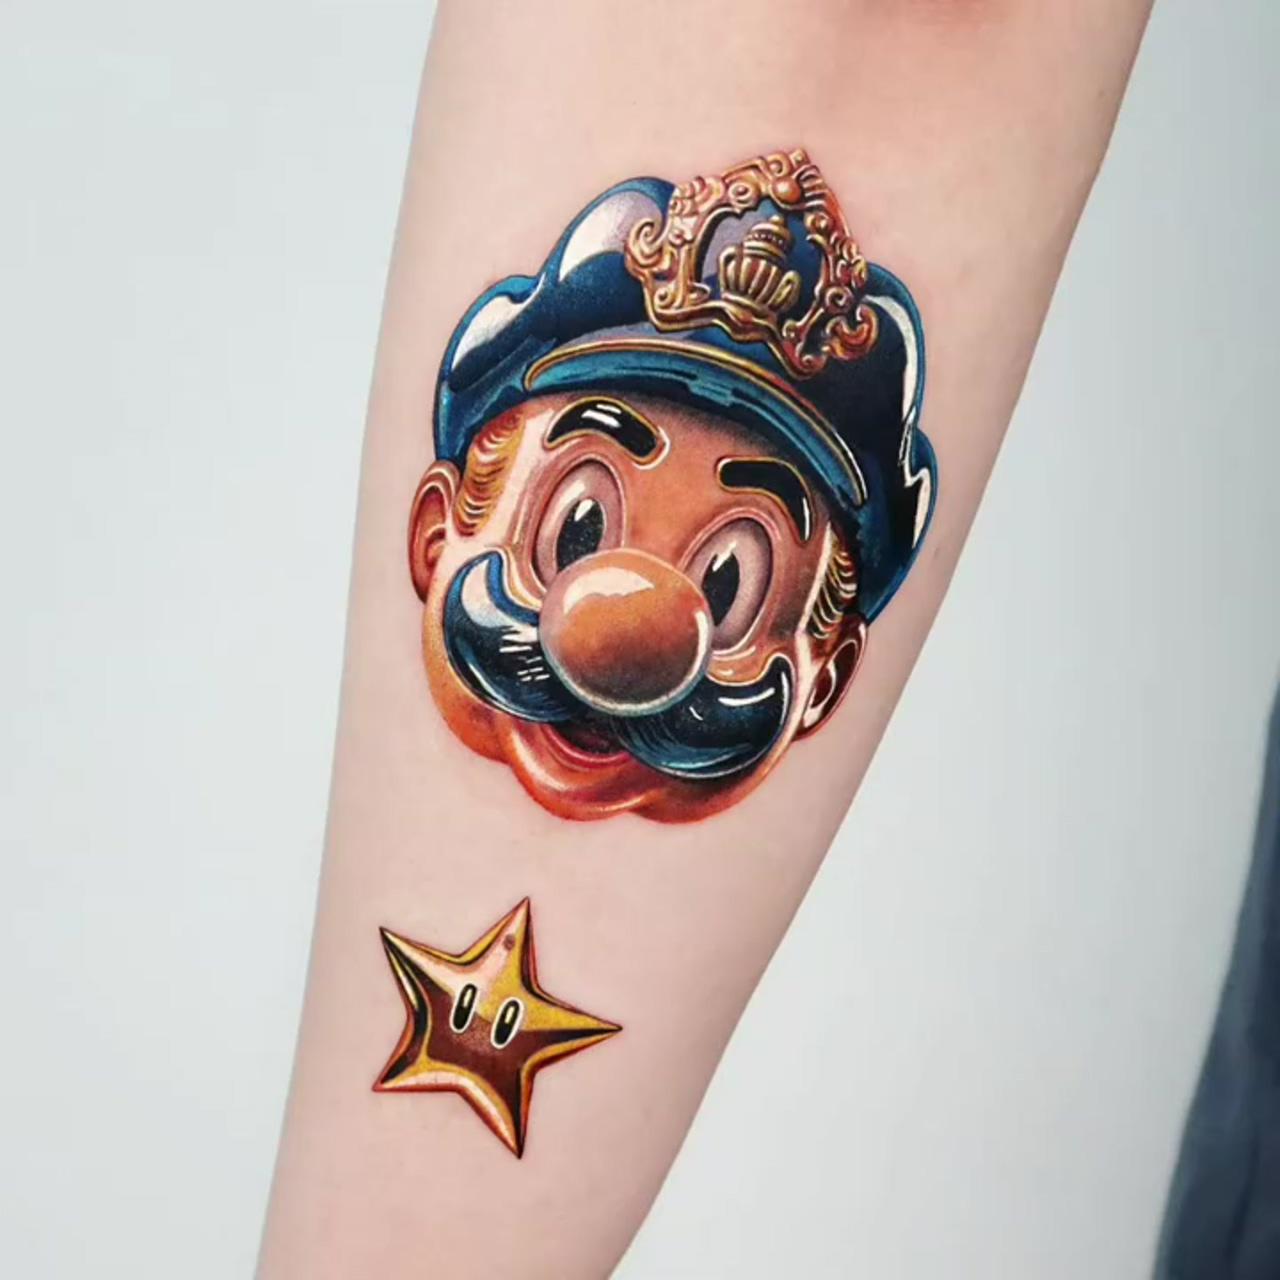 Mario bros tattoo; vikings tattoo